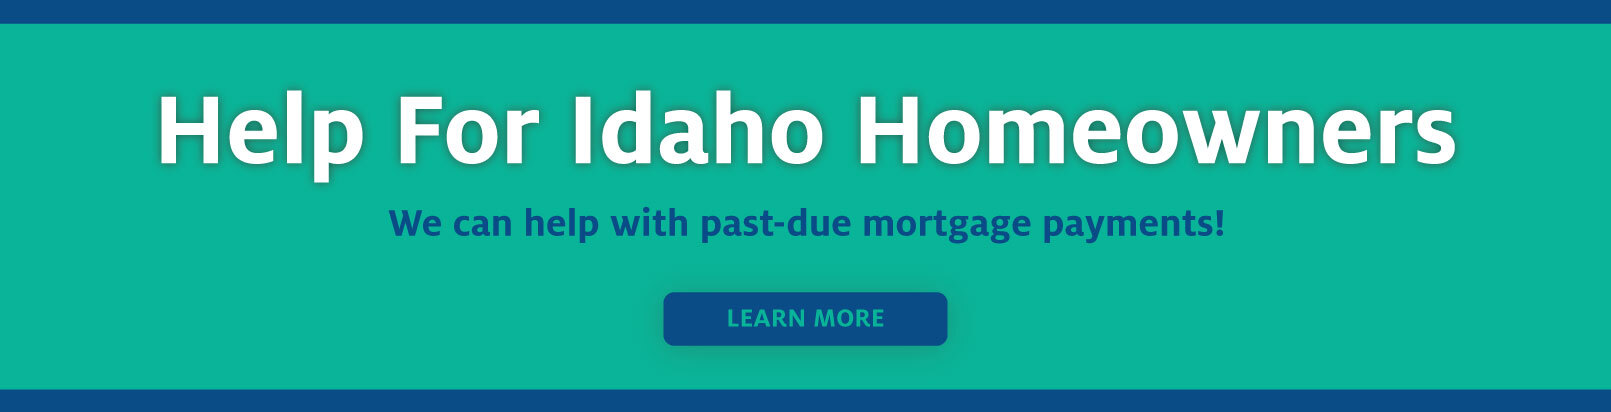 Homeownership Assistance Fund - Home Slide Image